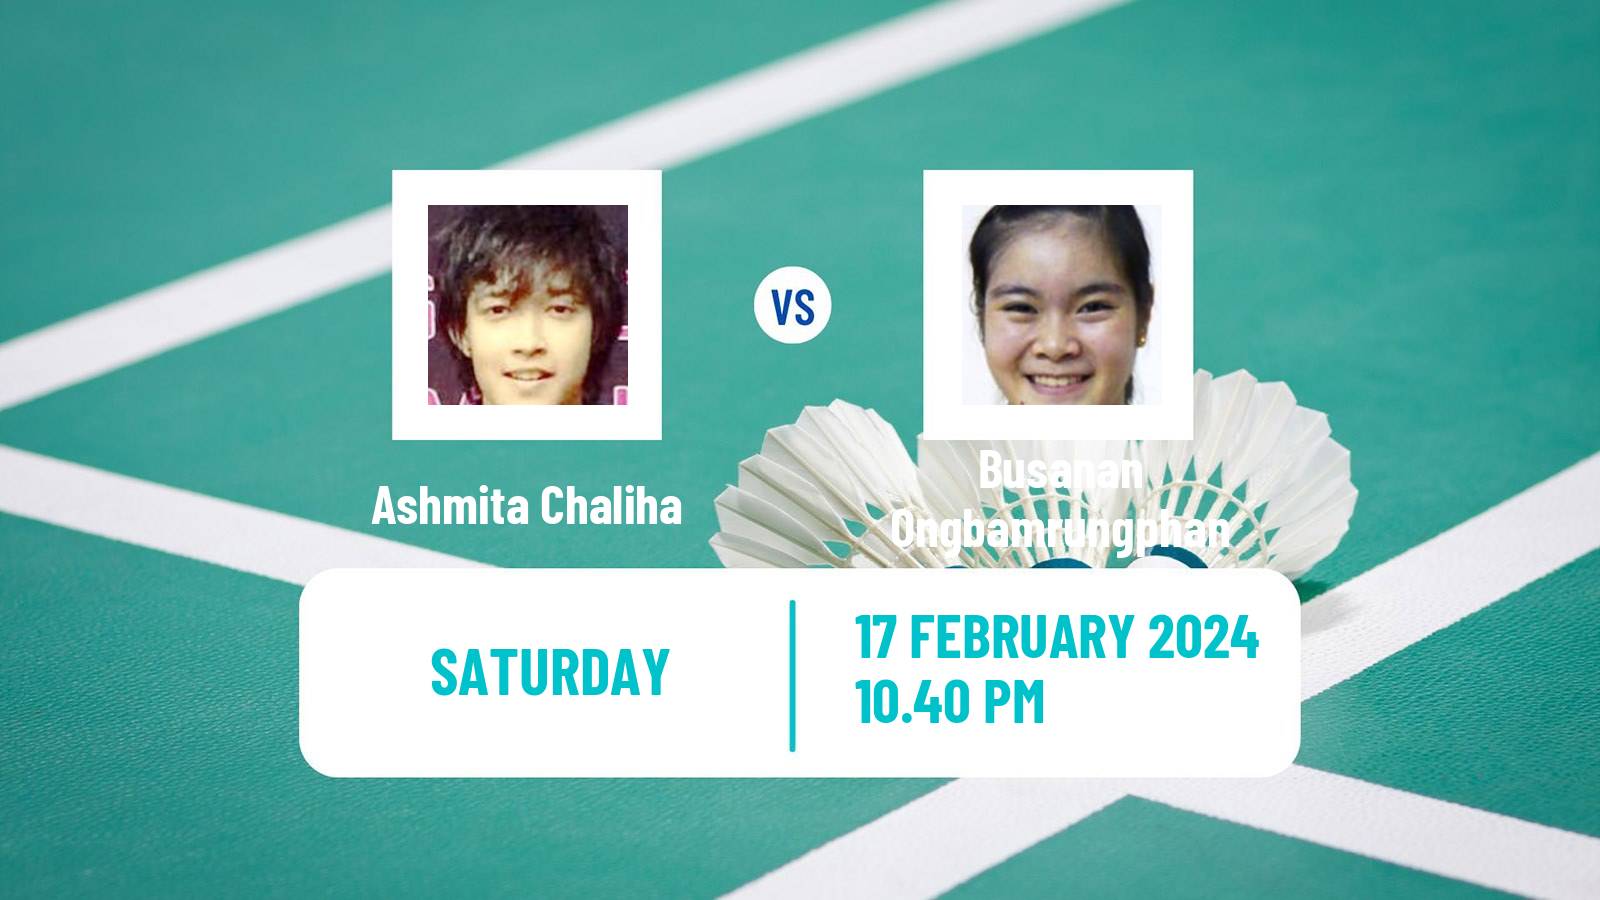 Badminton BWF Asia Championships Teams Women Ashmita Chaliha - Busanan Ongbamrungphan